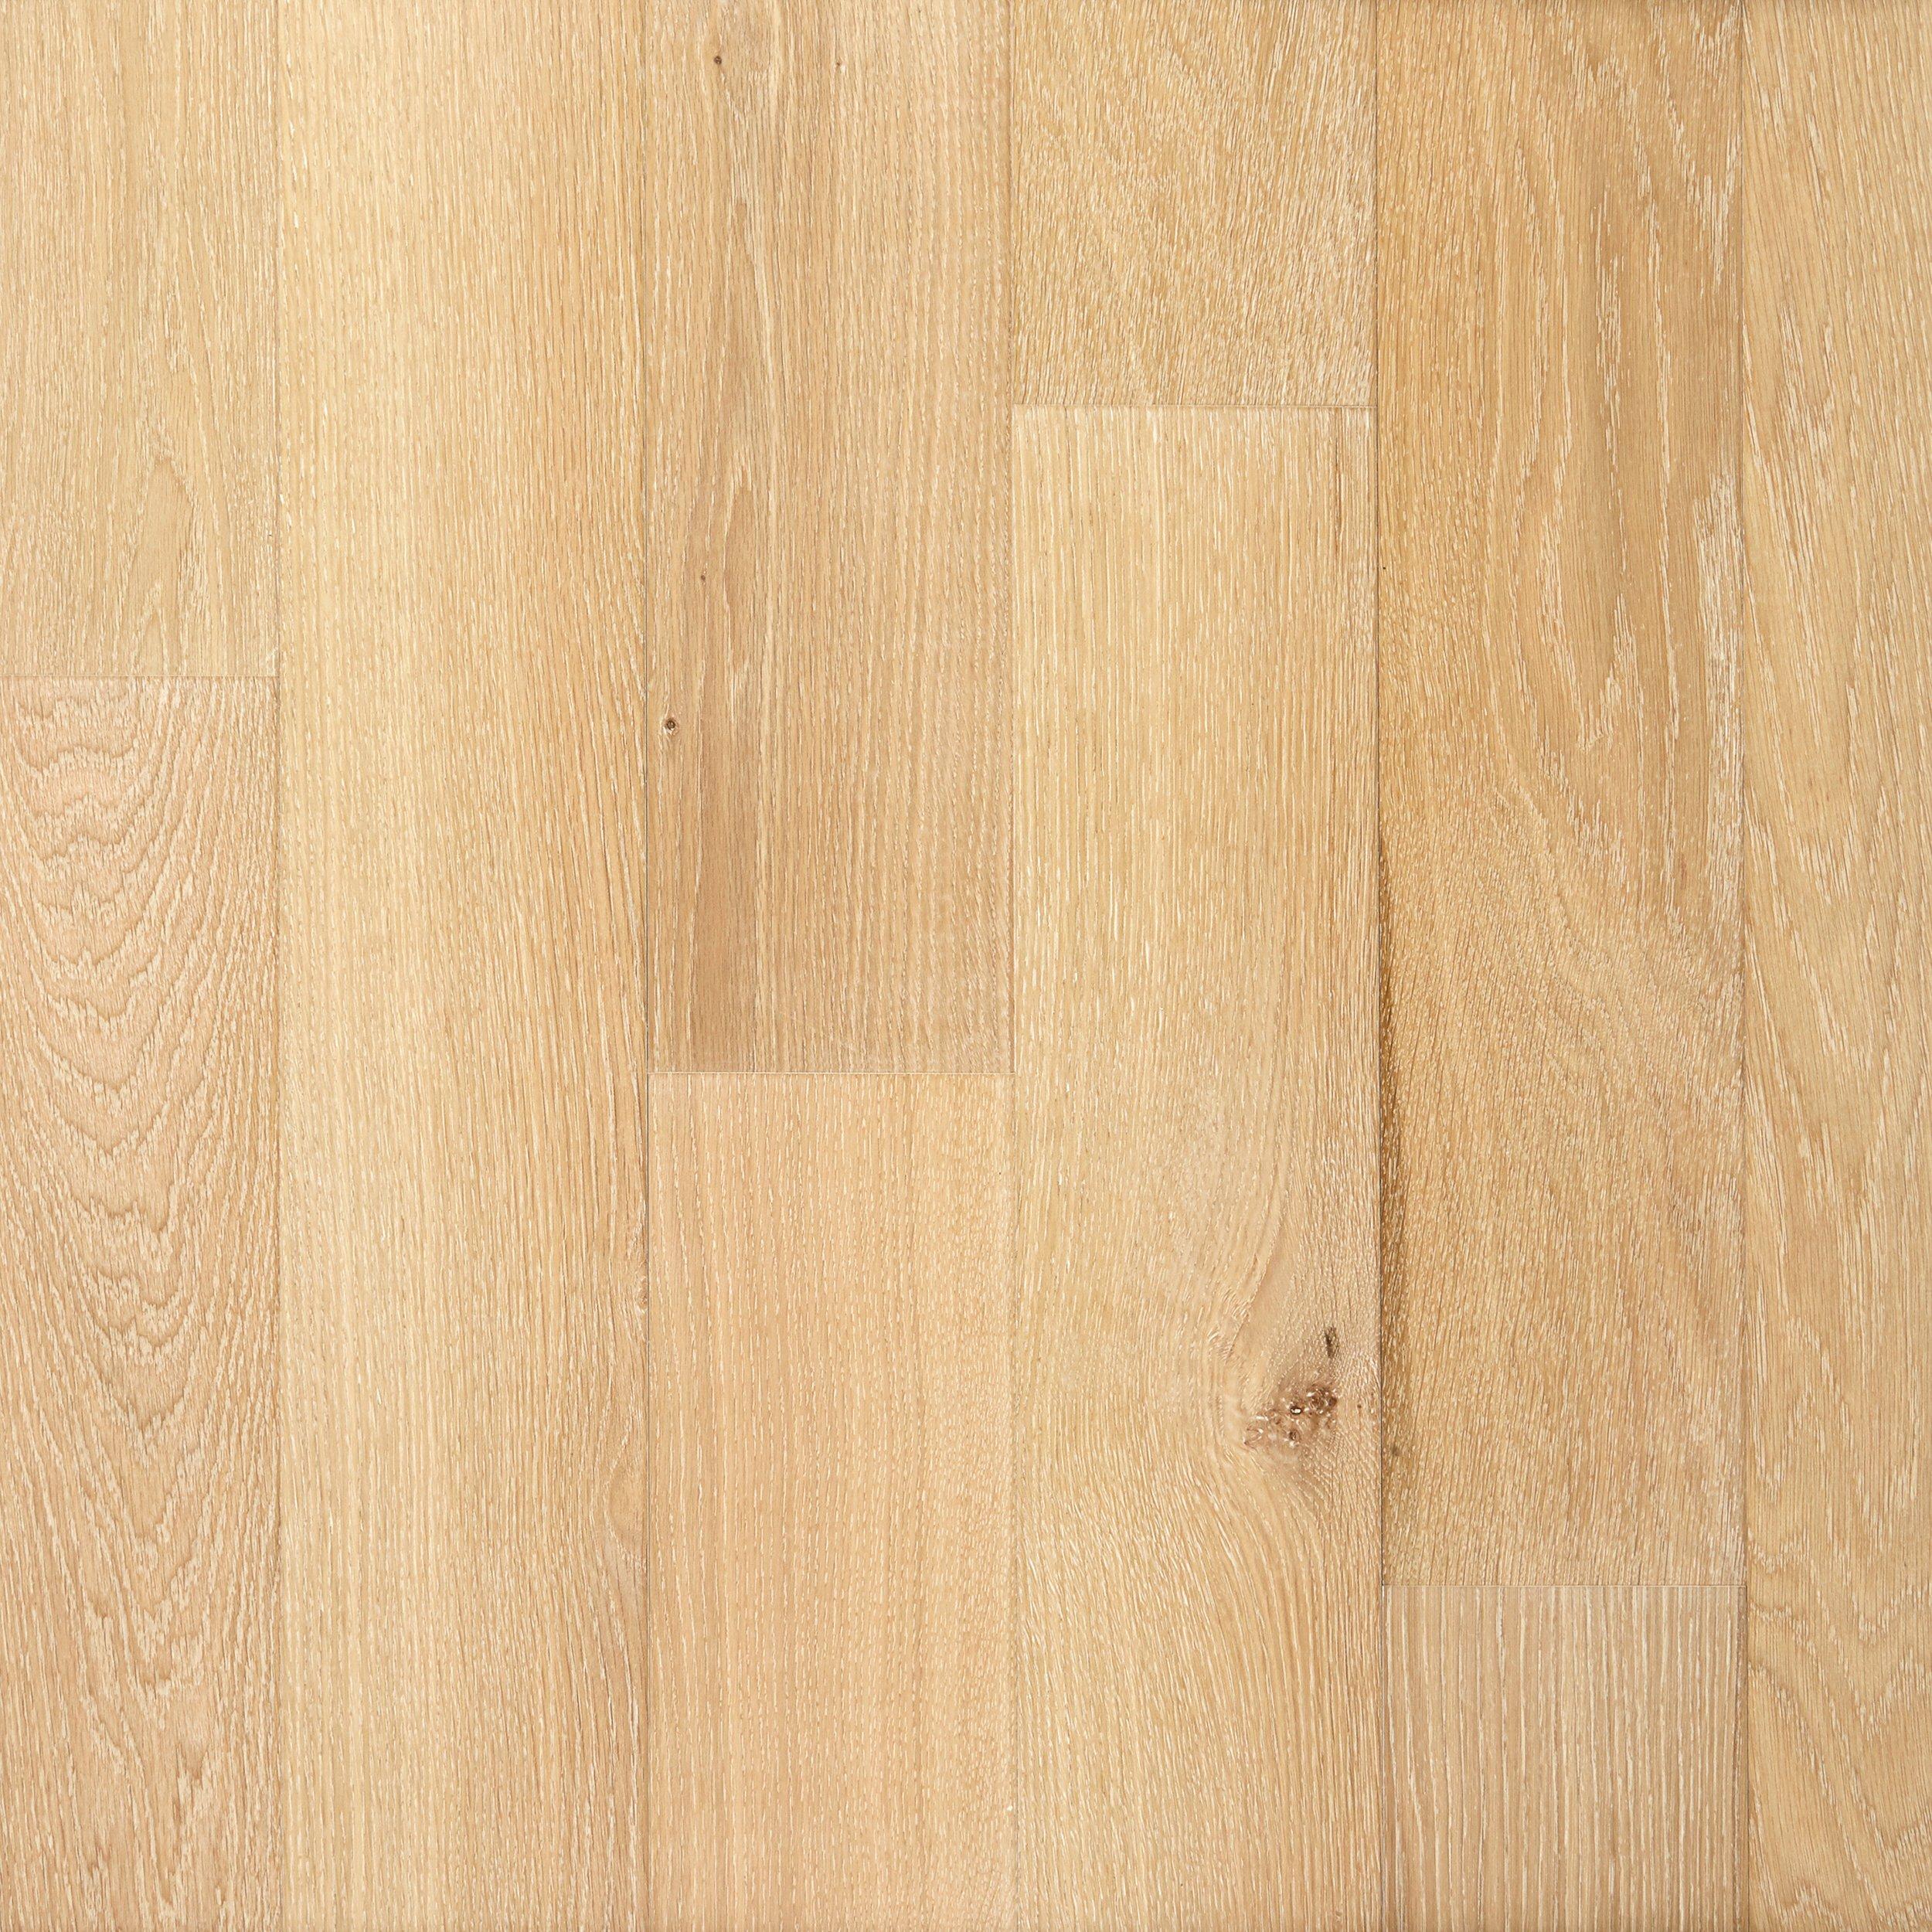 Ceruse Blonde Oak Wire Brushed Water, Wire Brushed Oak Engineered Hardwood Flooring